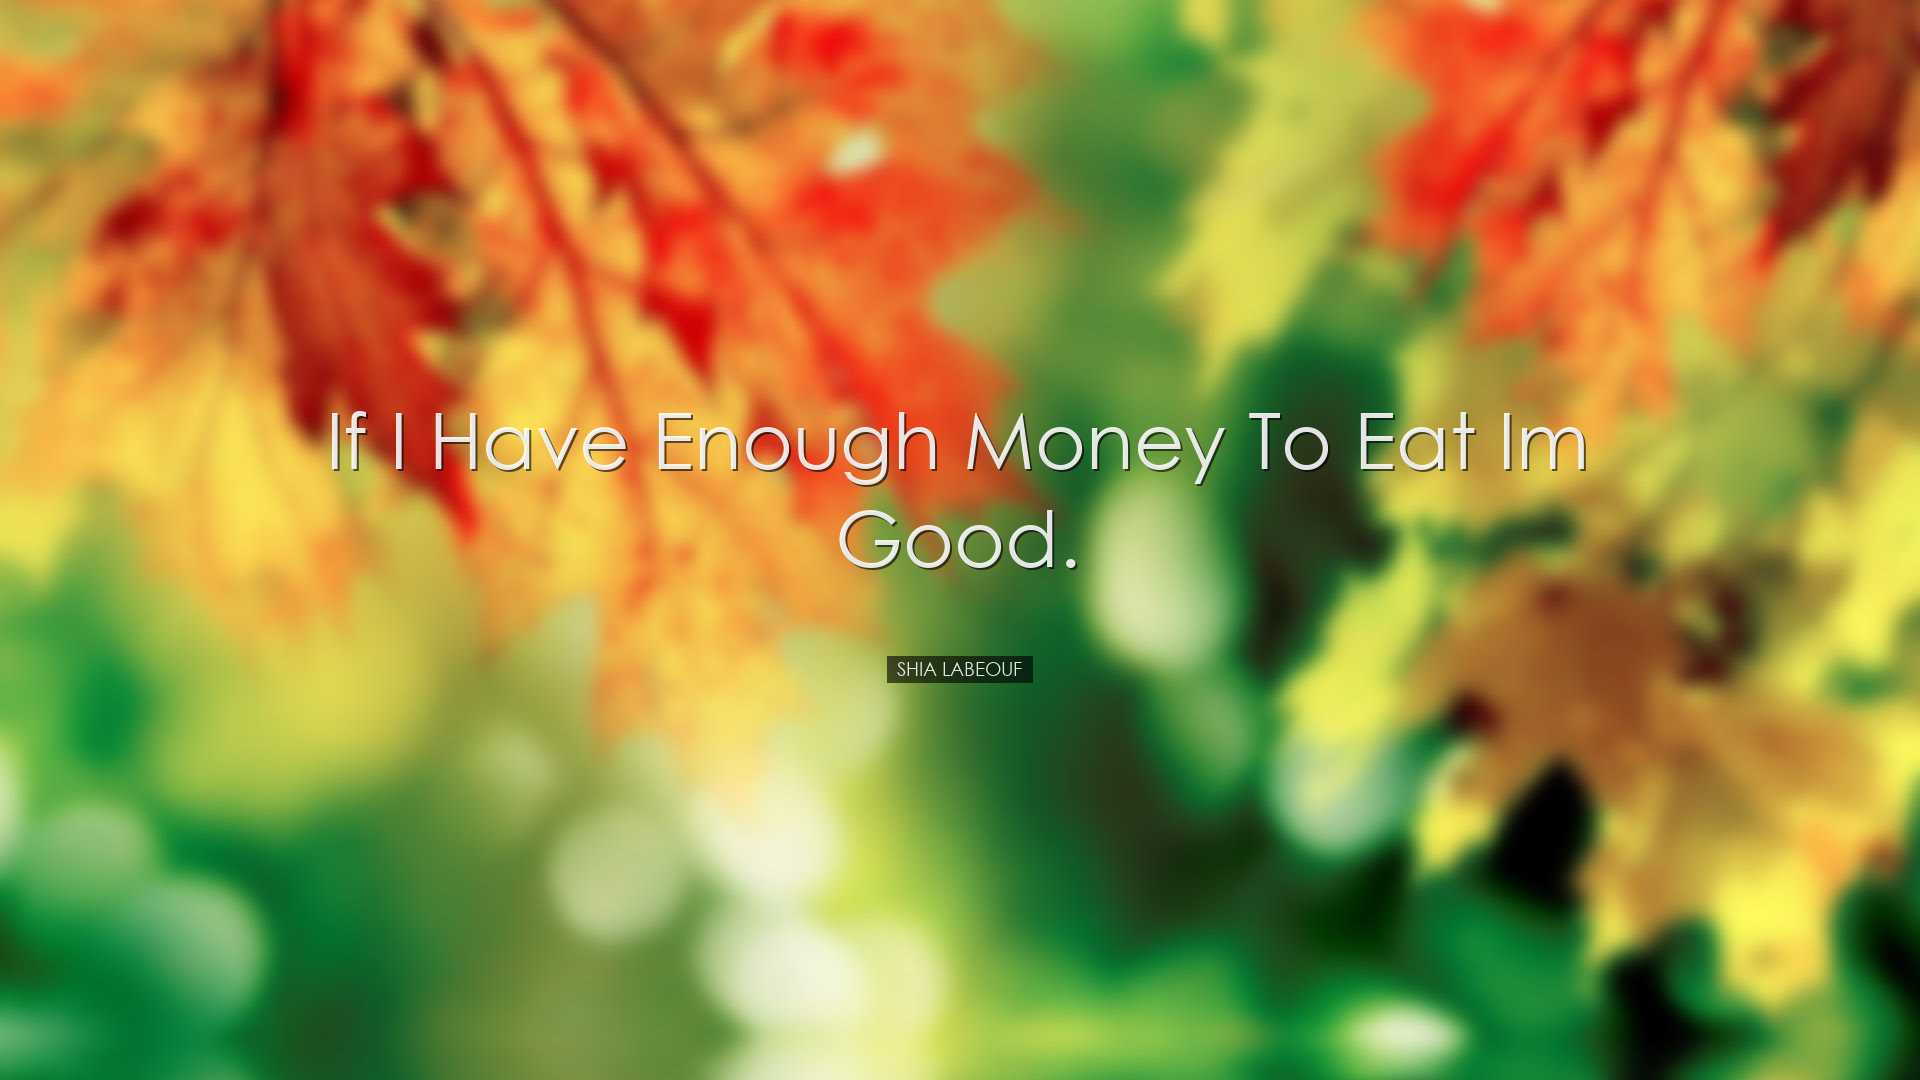 If I have enough money to eat Im good. - Shia LaBeouf